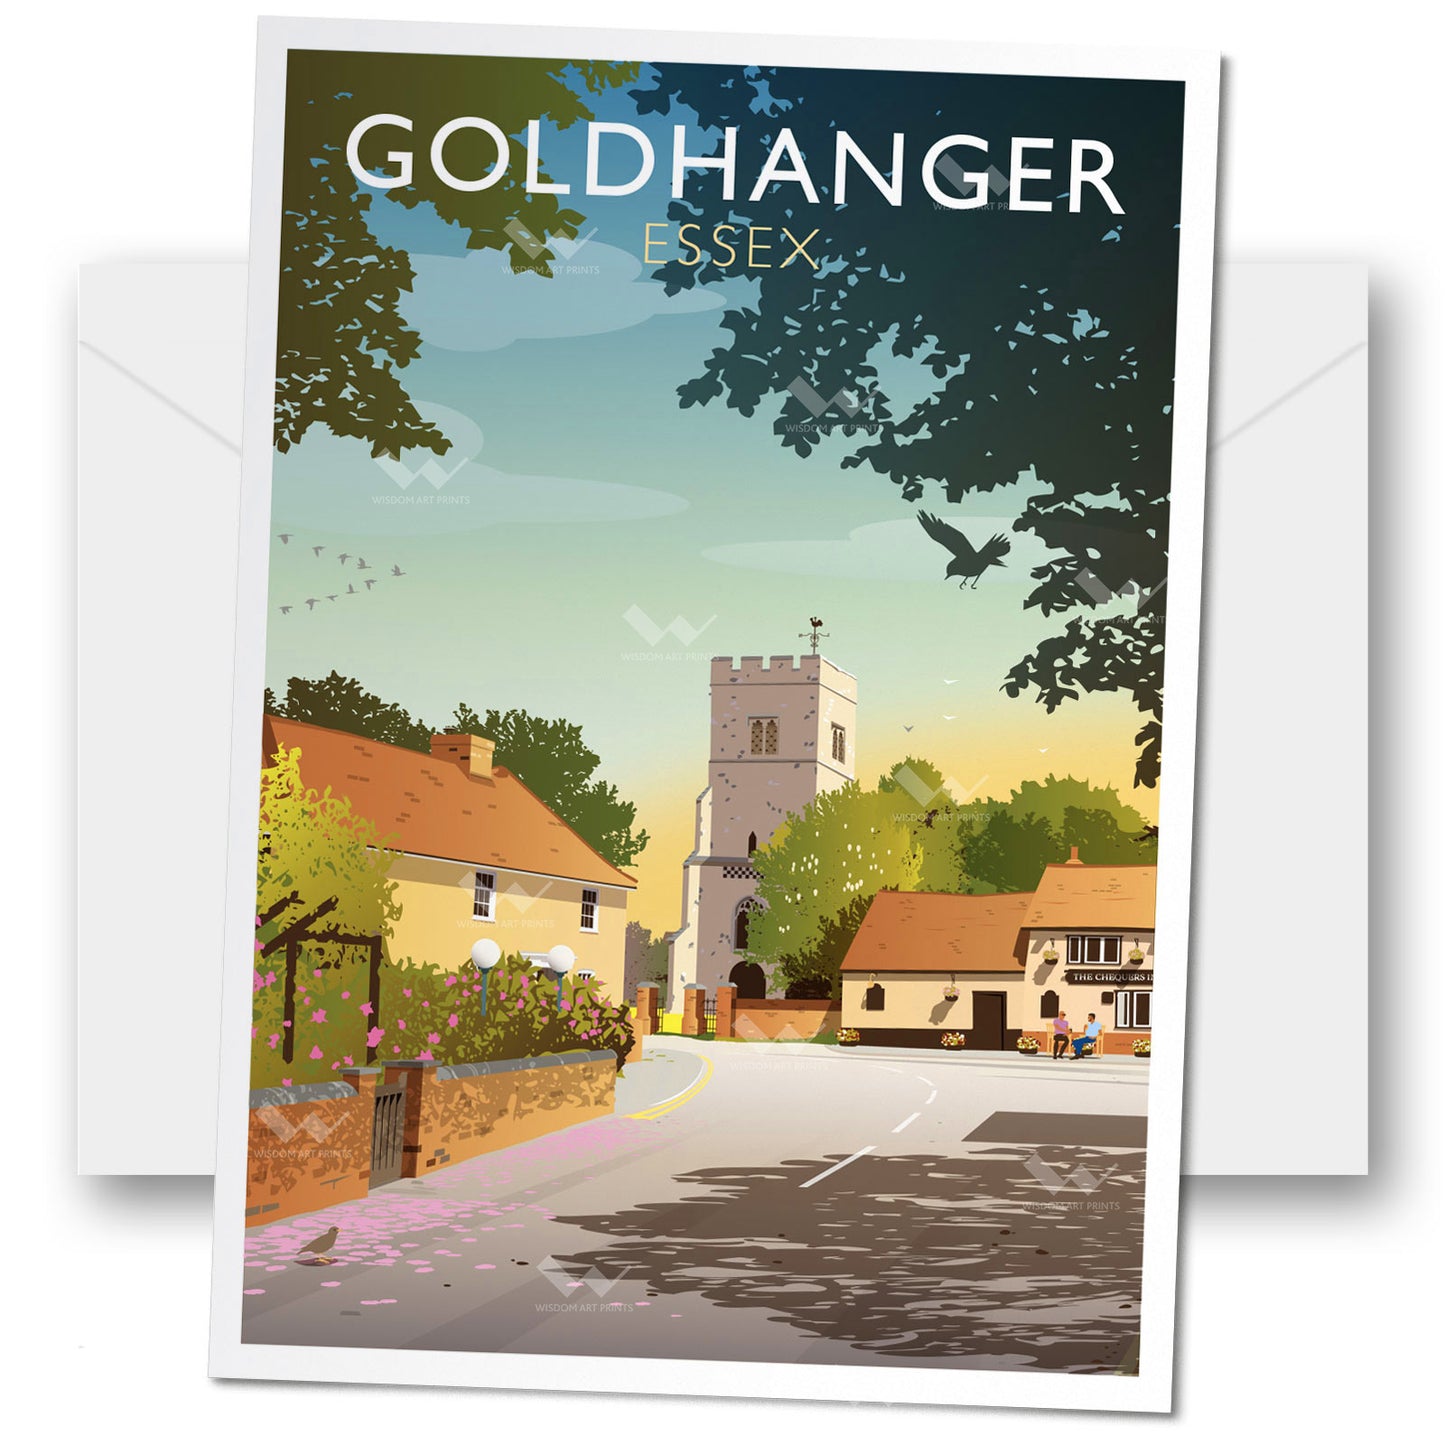 Goldhanger, Essex